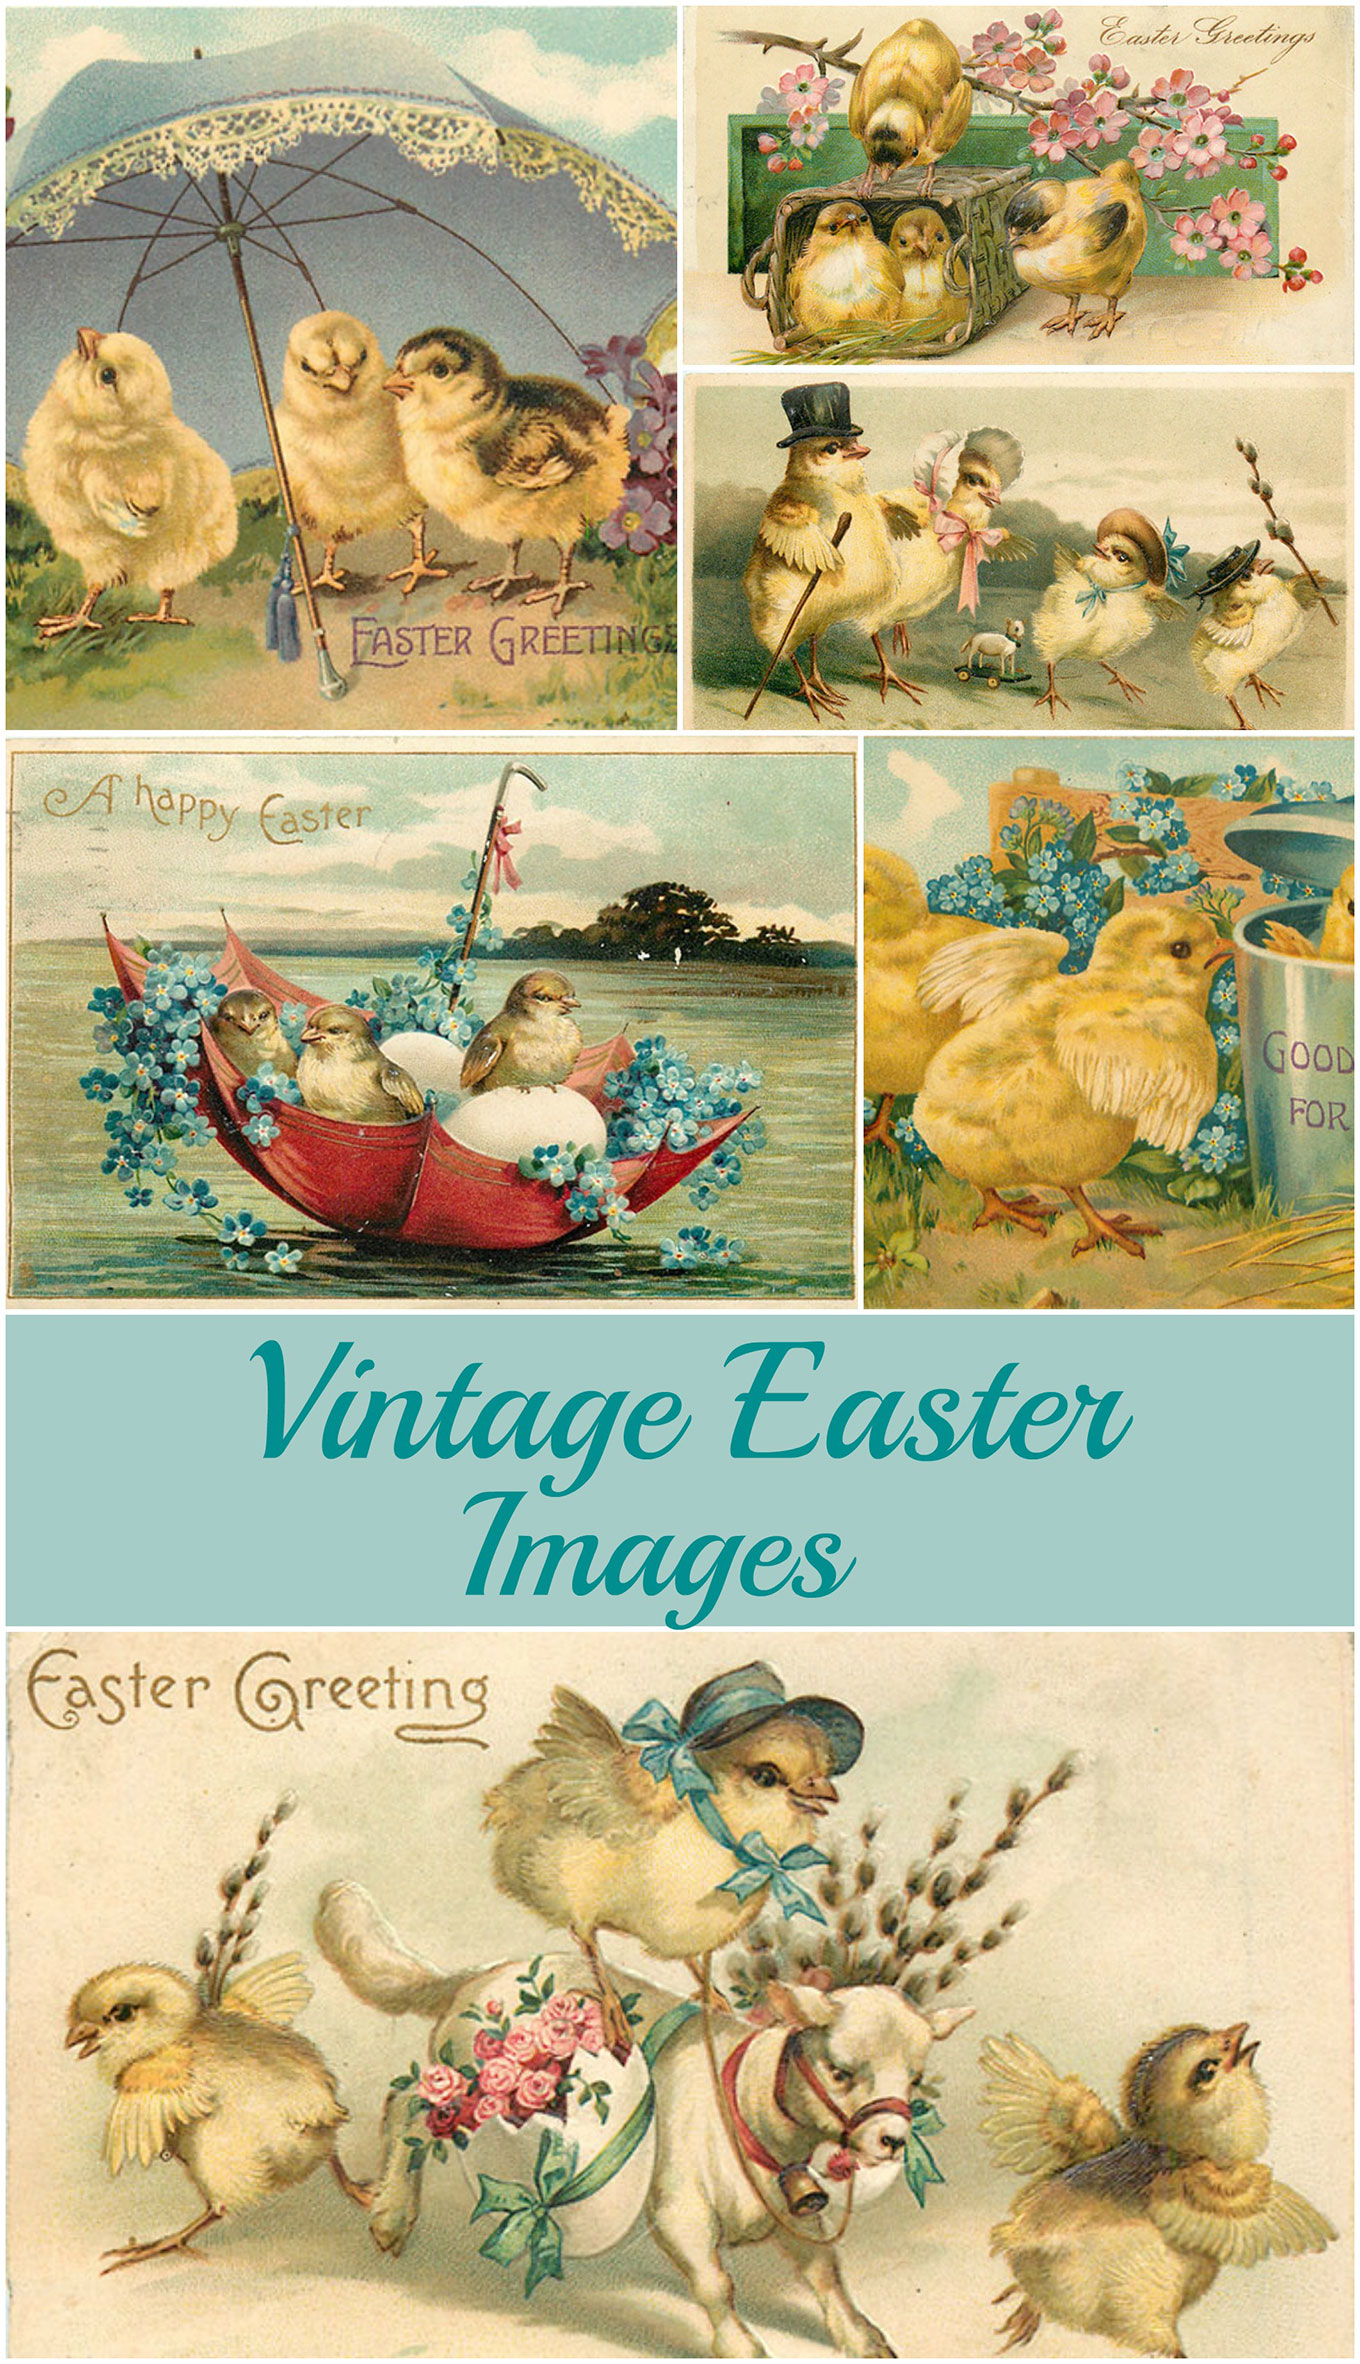 Printable vintage Easter images for crafting.